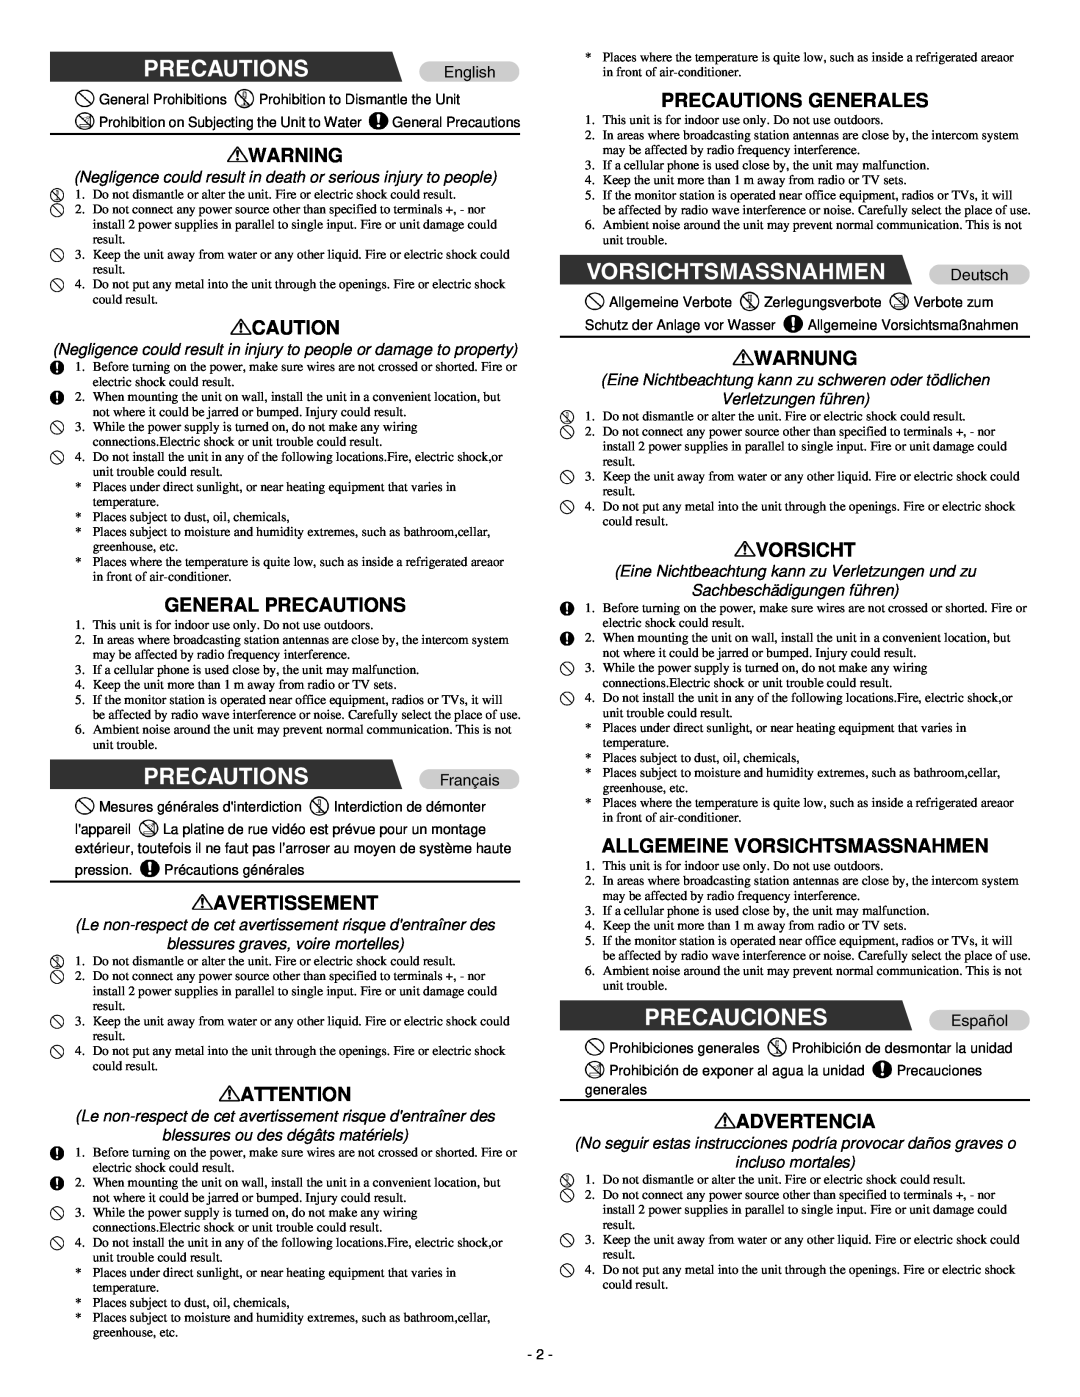 Aiphone ja-2sd operation manual General Precautions, Avertissement, Precautions Generales, Warnung, Vorsicht, Advertencia 